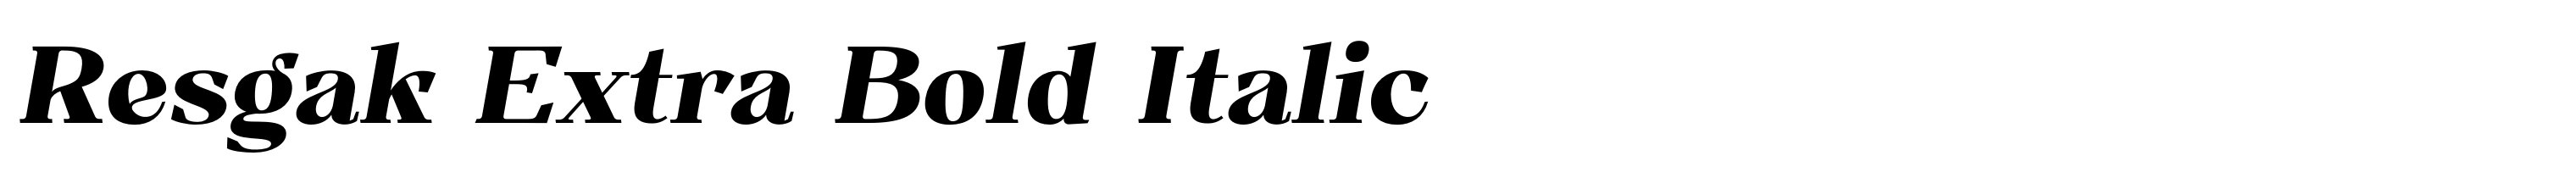 Resgak Extra Bold Italic